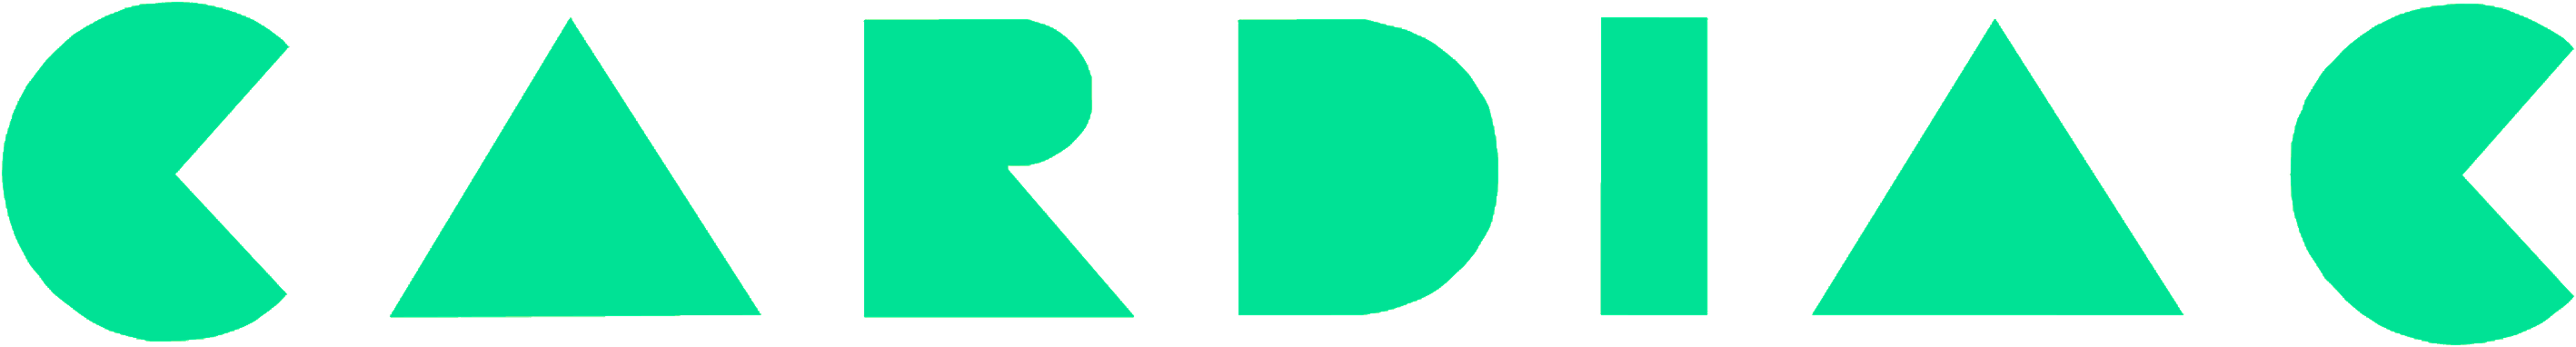 cardiac logo